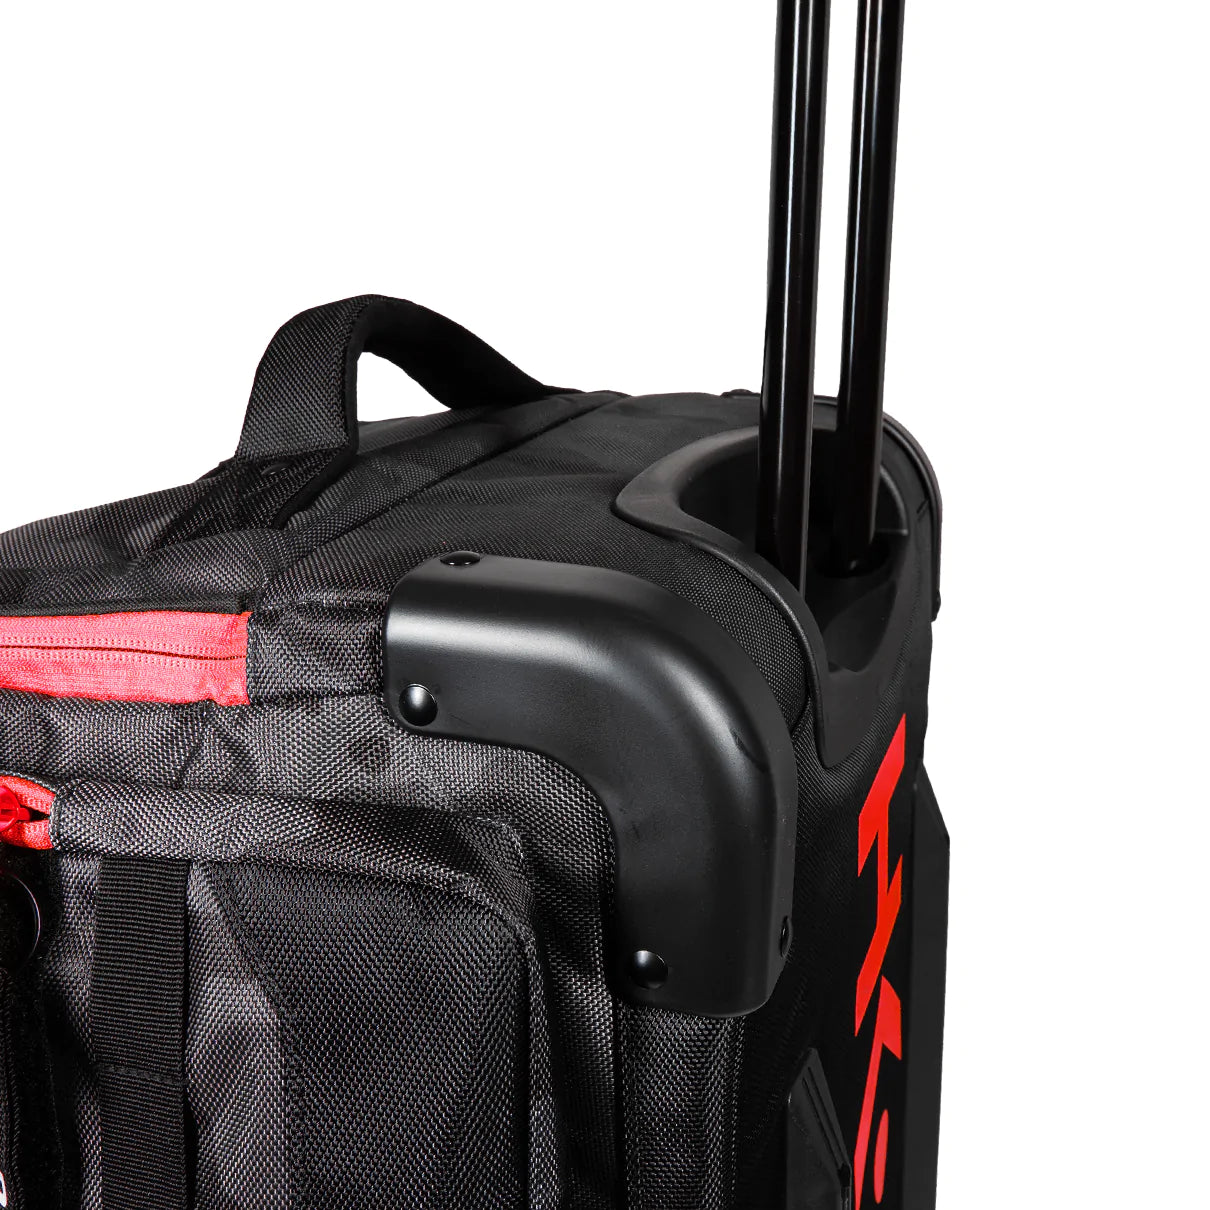 Expand 75L - Roller Gear Bag - Shroud Red | Paintball Gear Bag | Hk Army